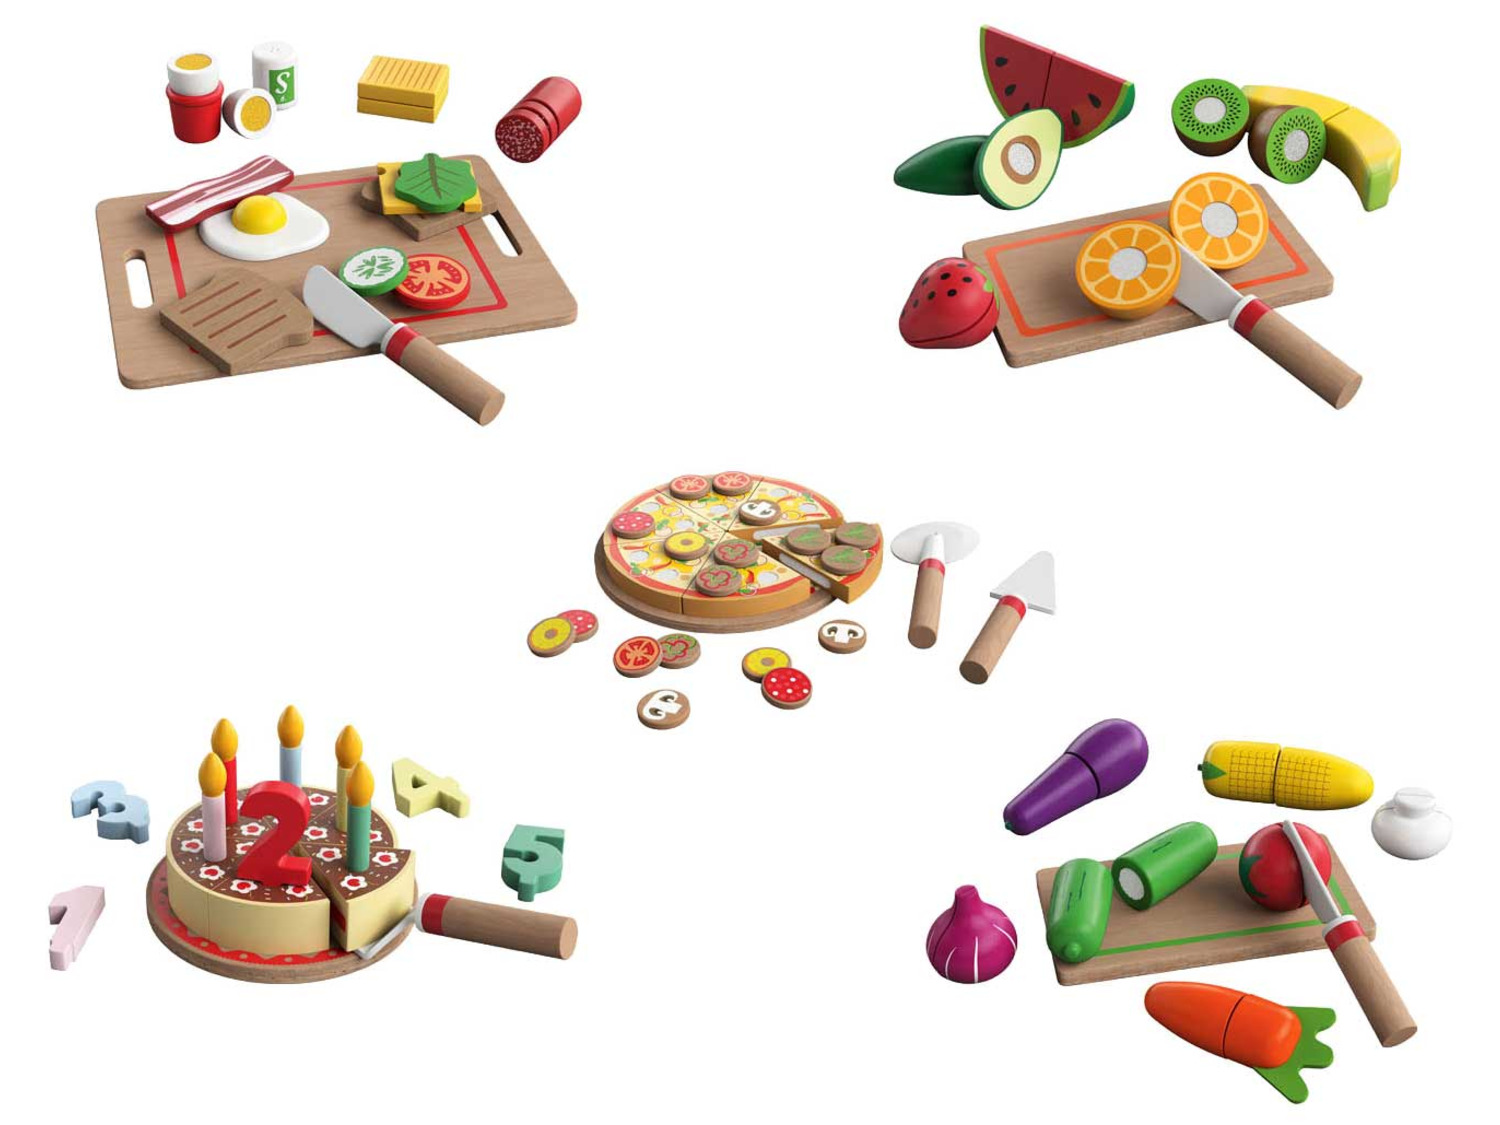 Lebensmittel Sortiment Kinderspielzeug 